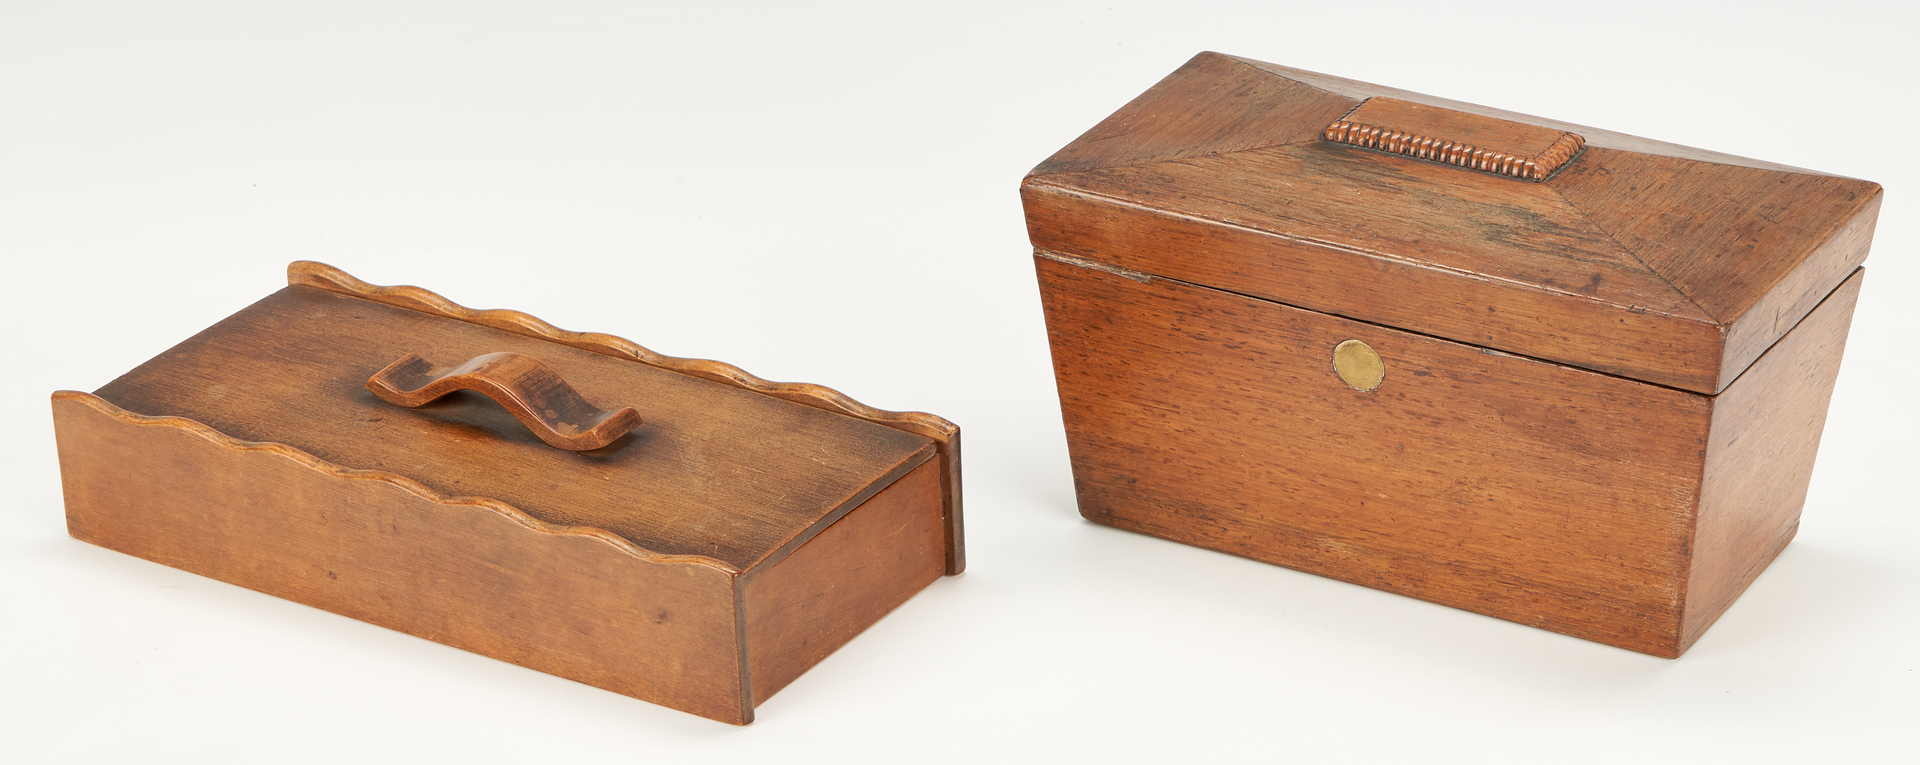 Lot 933: 4 Wooden Boxes, incl. Burlwood Dresser Box